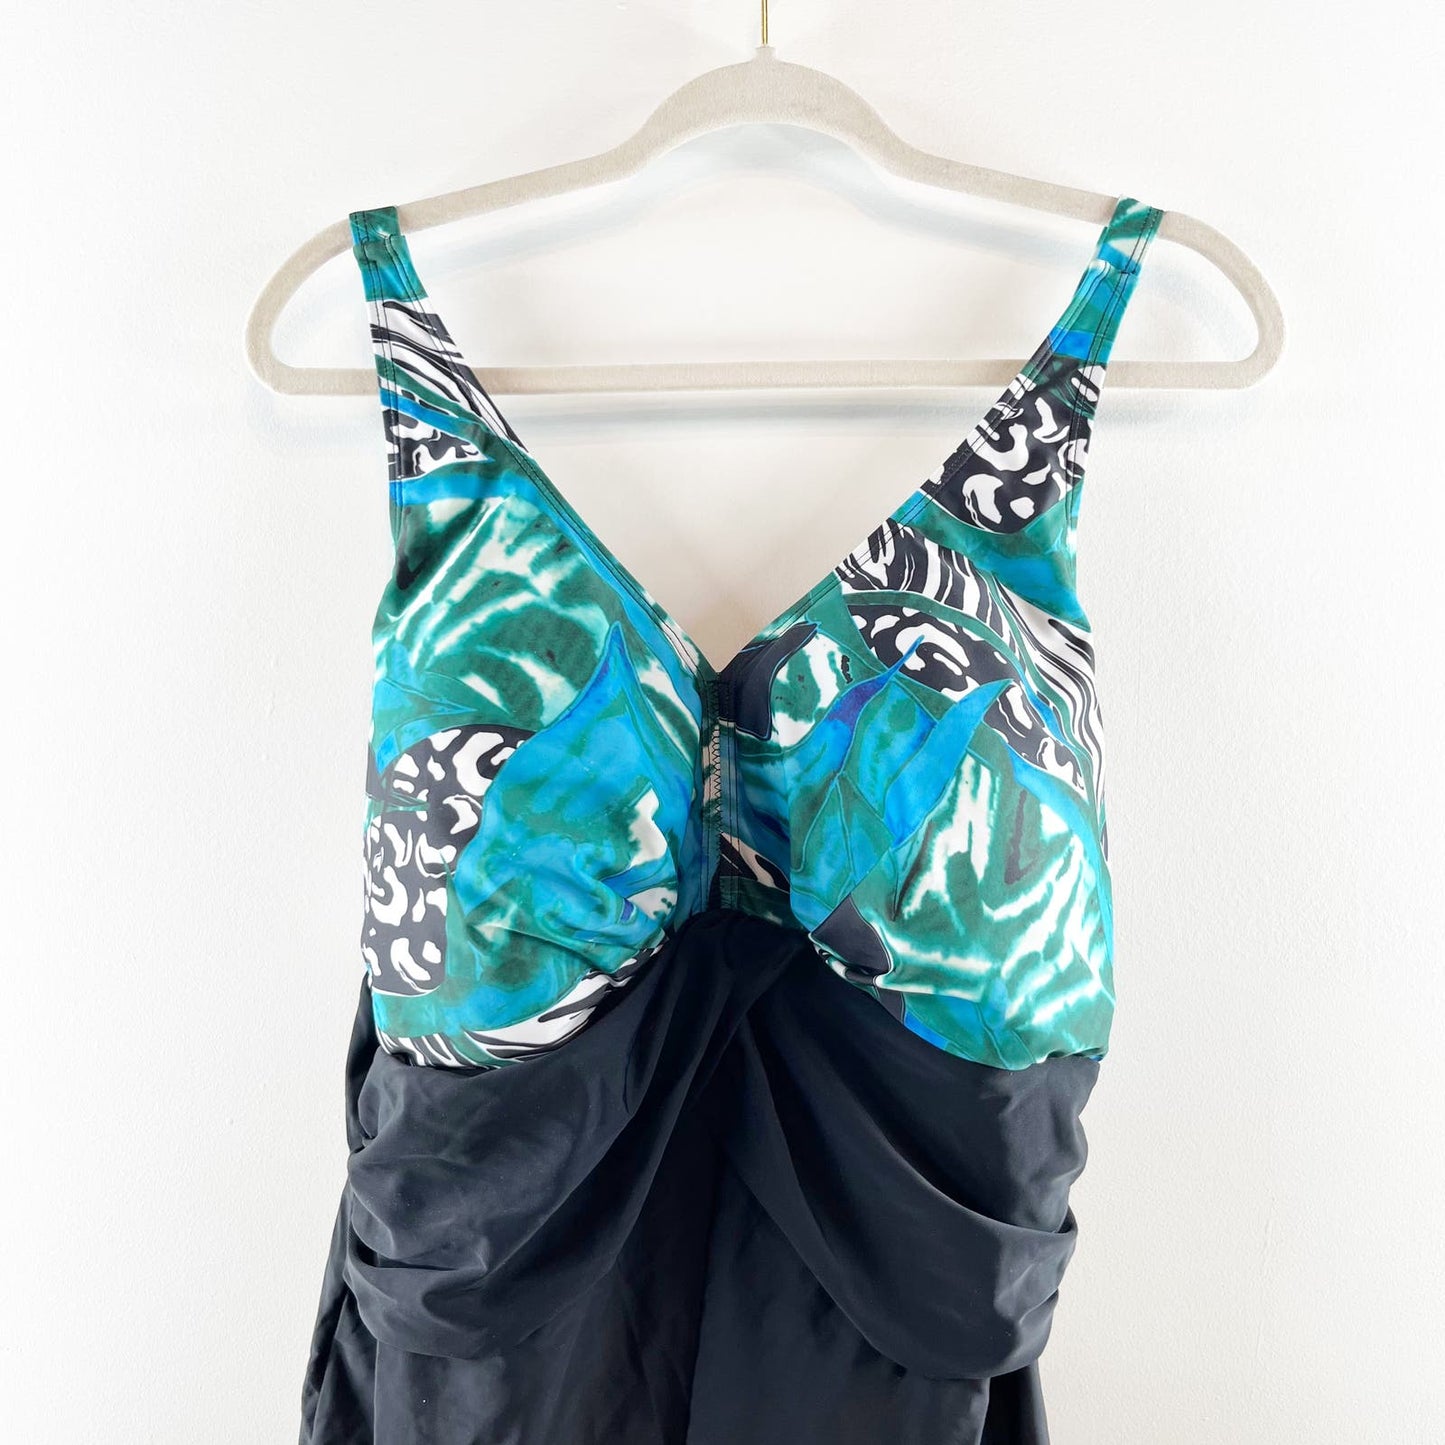 Perona One Piece Swimsuit Shaping Swimdress Blue Black 20 W